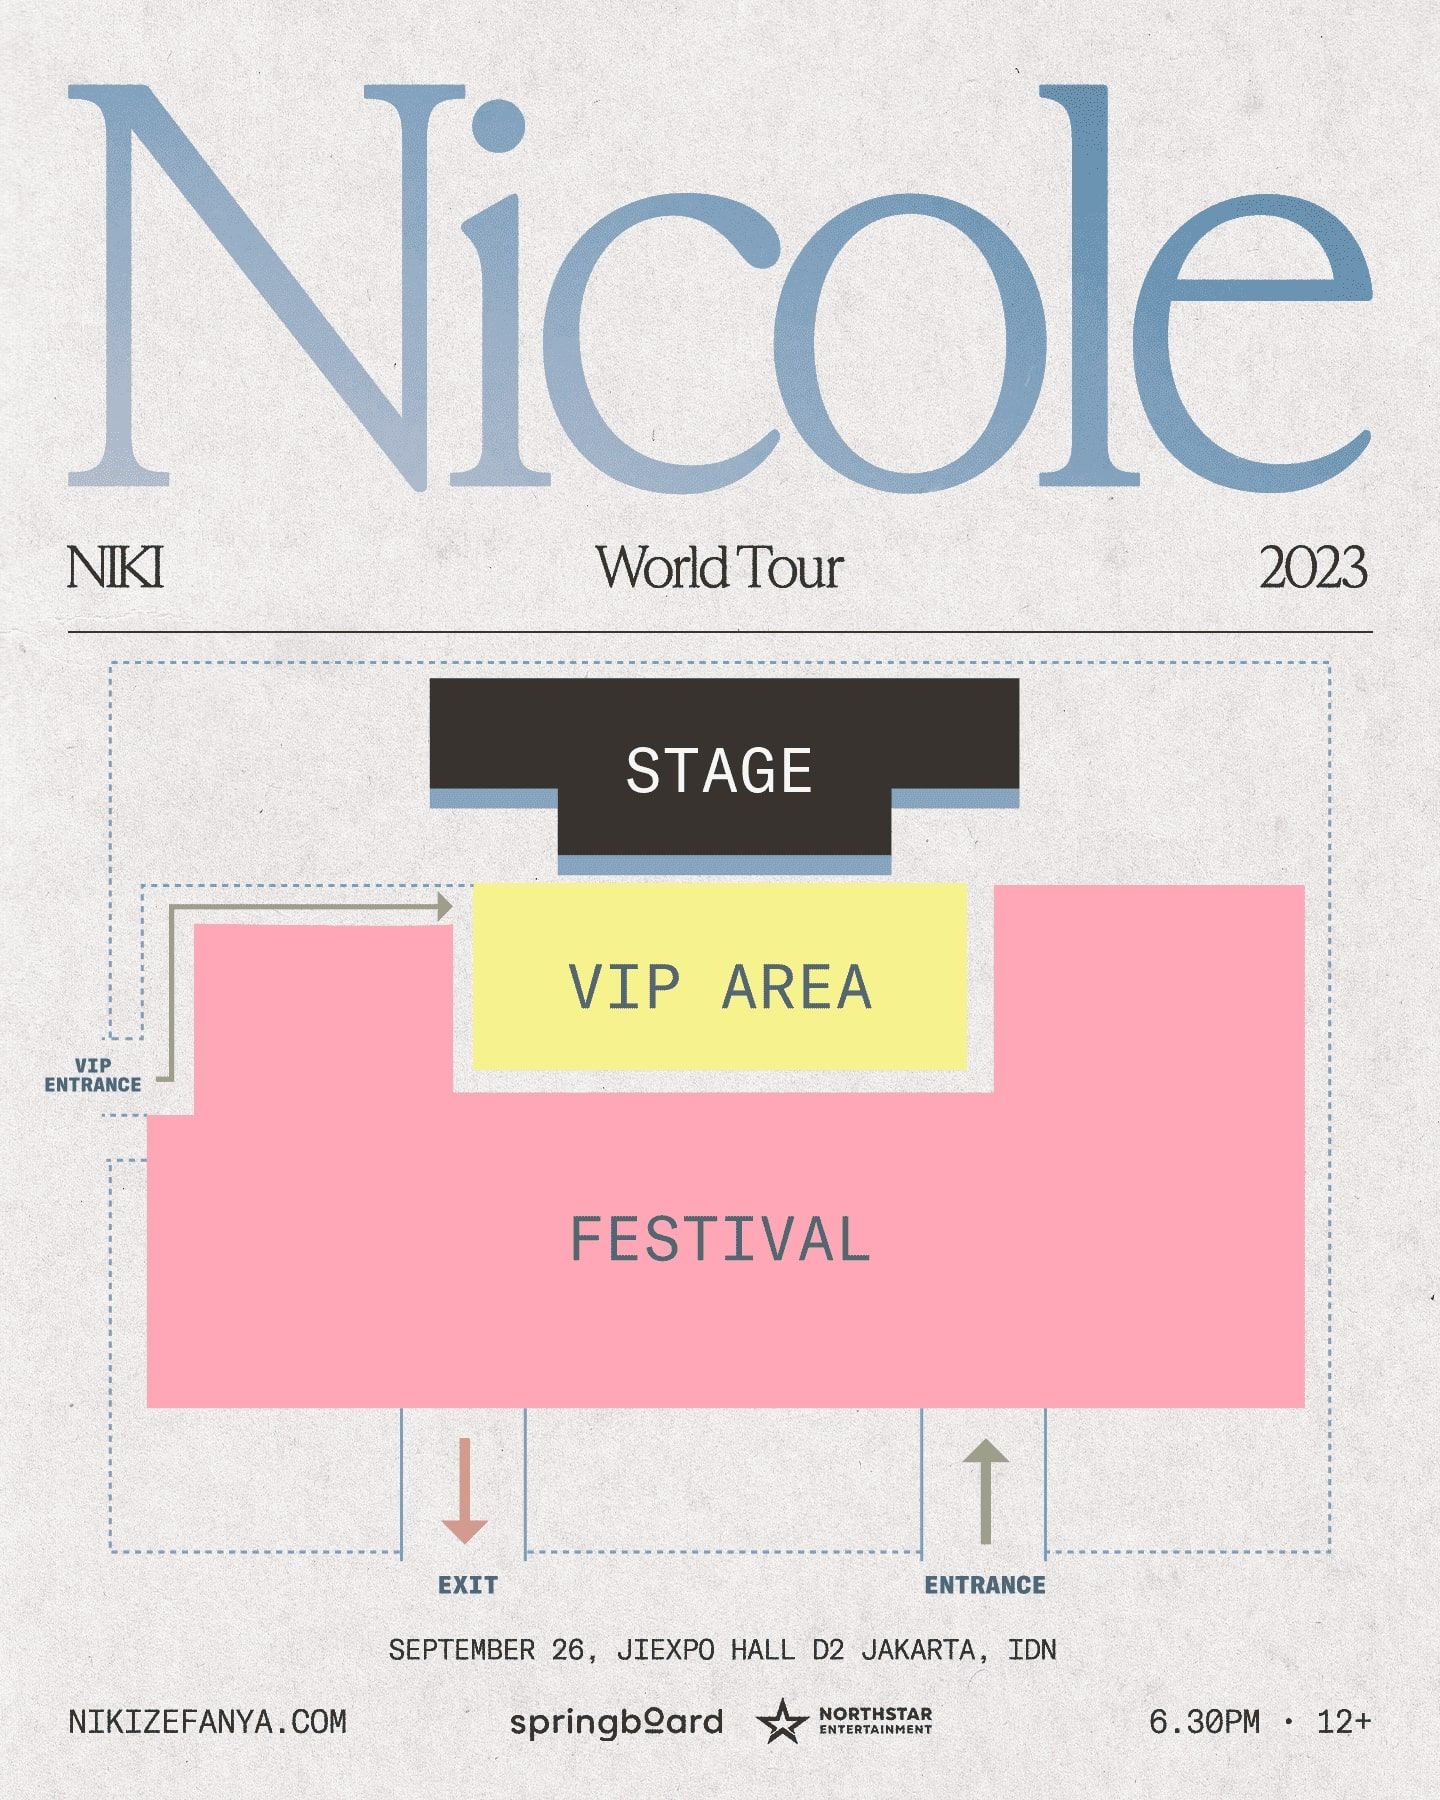 Seat plan konser NIKI 'Nicole World Tour 2023' di Jakarta.